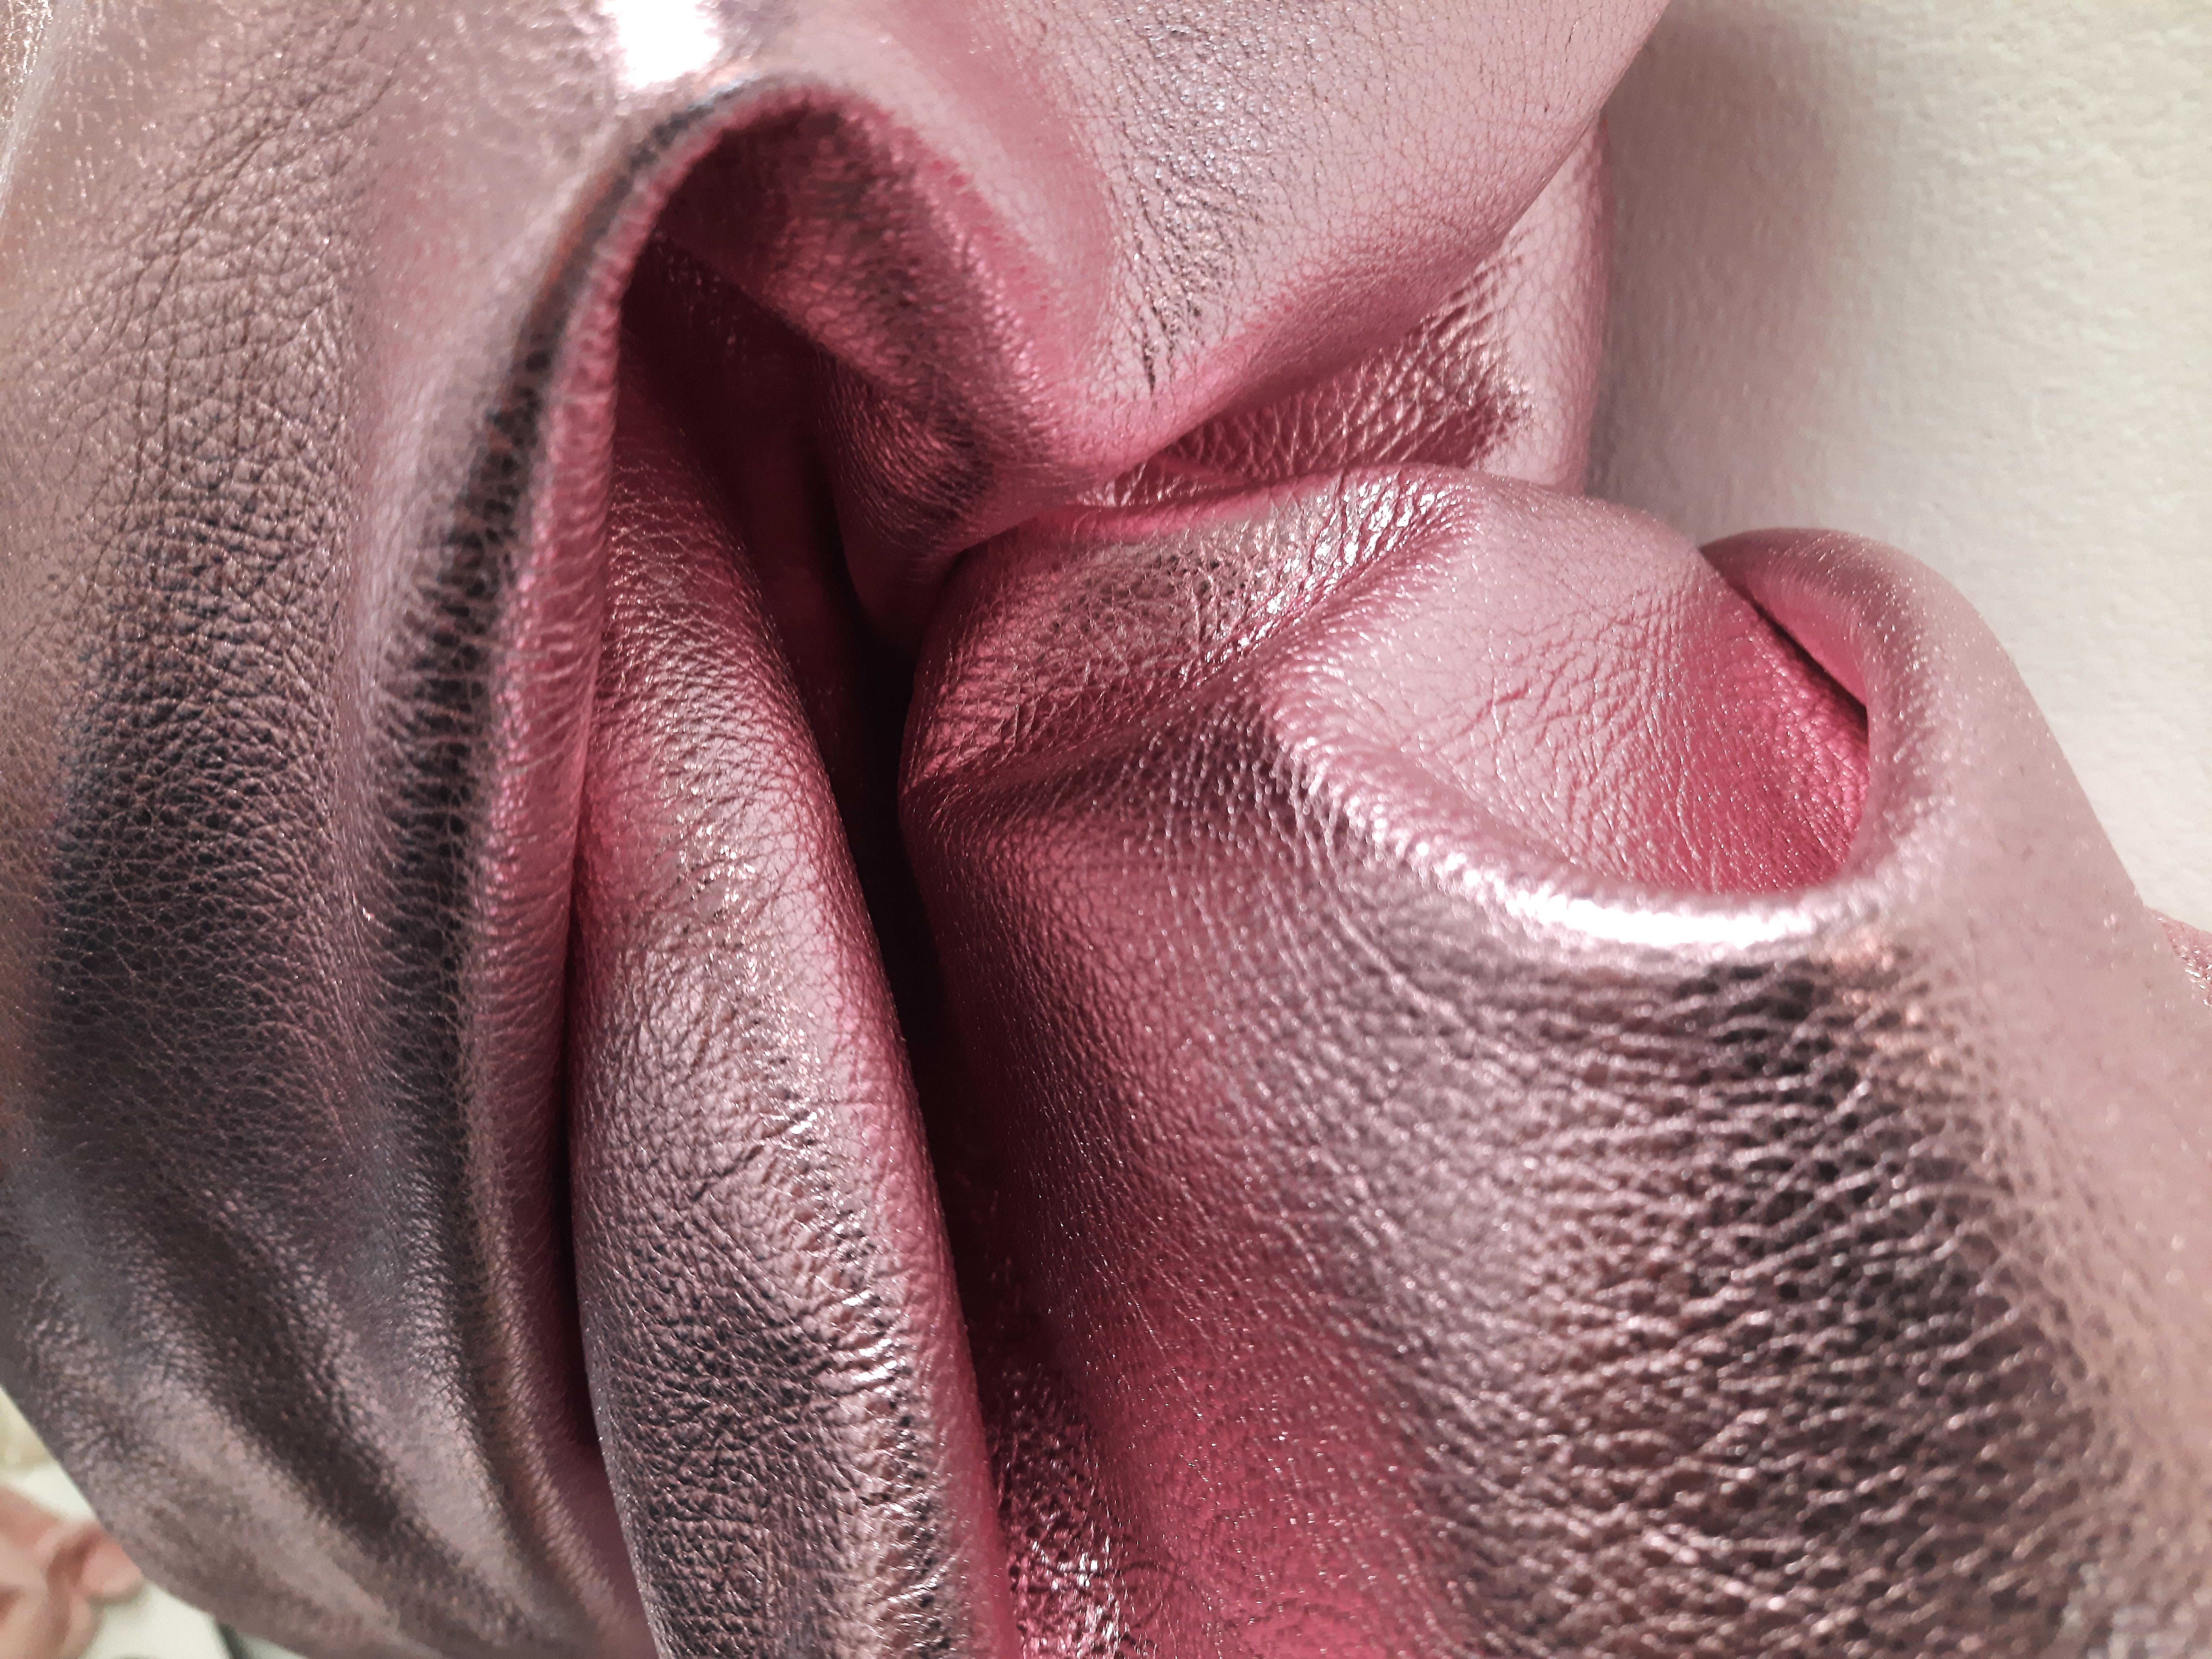 Drape 113 (light pink  folds rose pop slick metallic smooth wall sculpture art) - Sculpture by Ted VanCleave